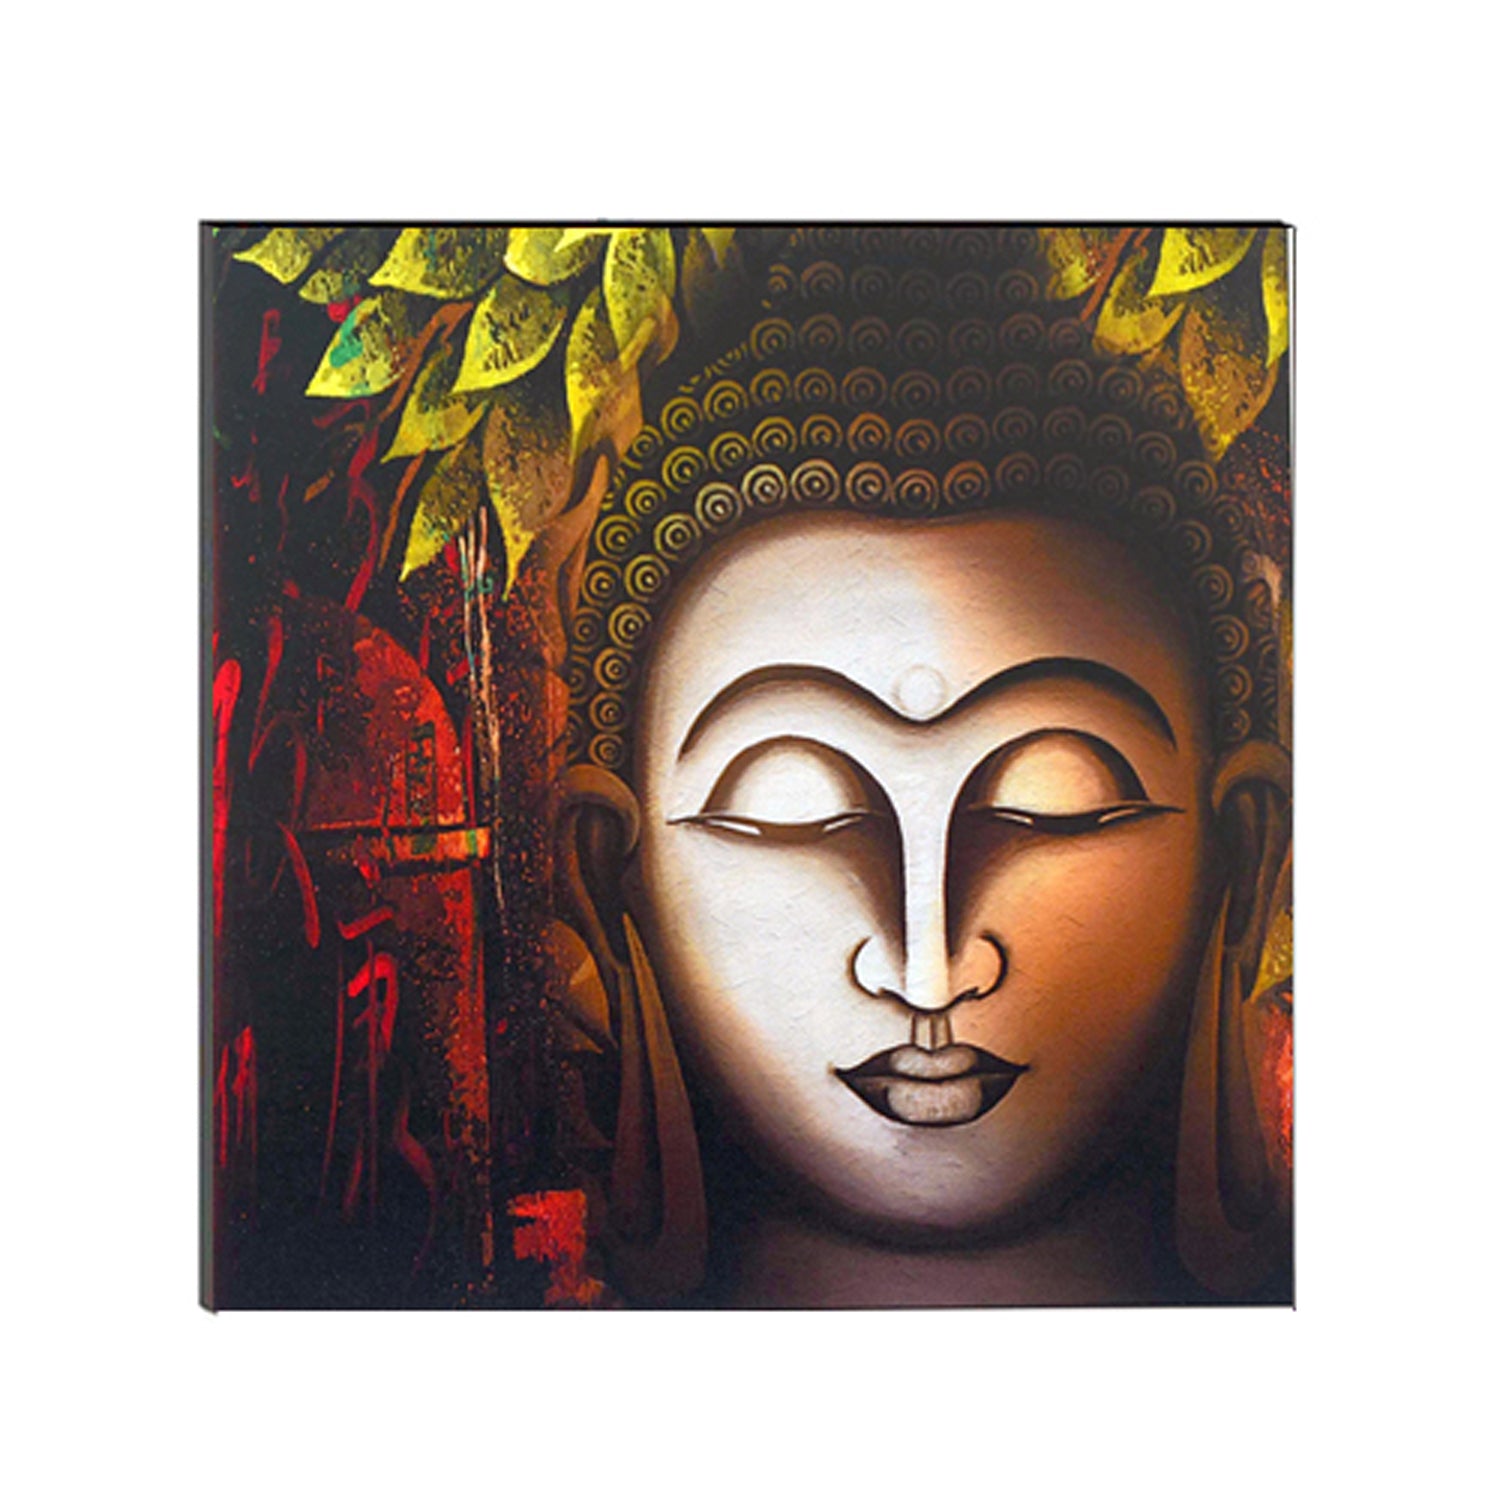 Meditating Lord Buddha Painting Digital Printed Religious Wall Art